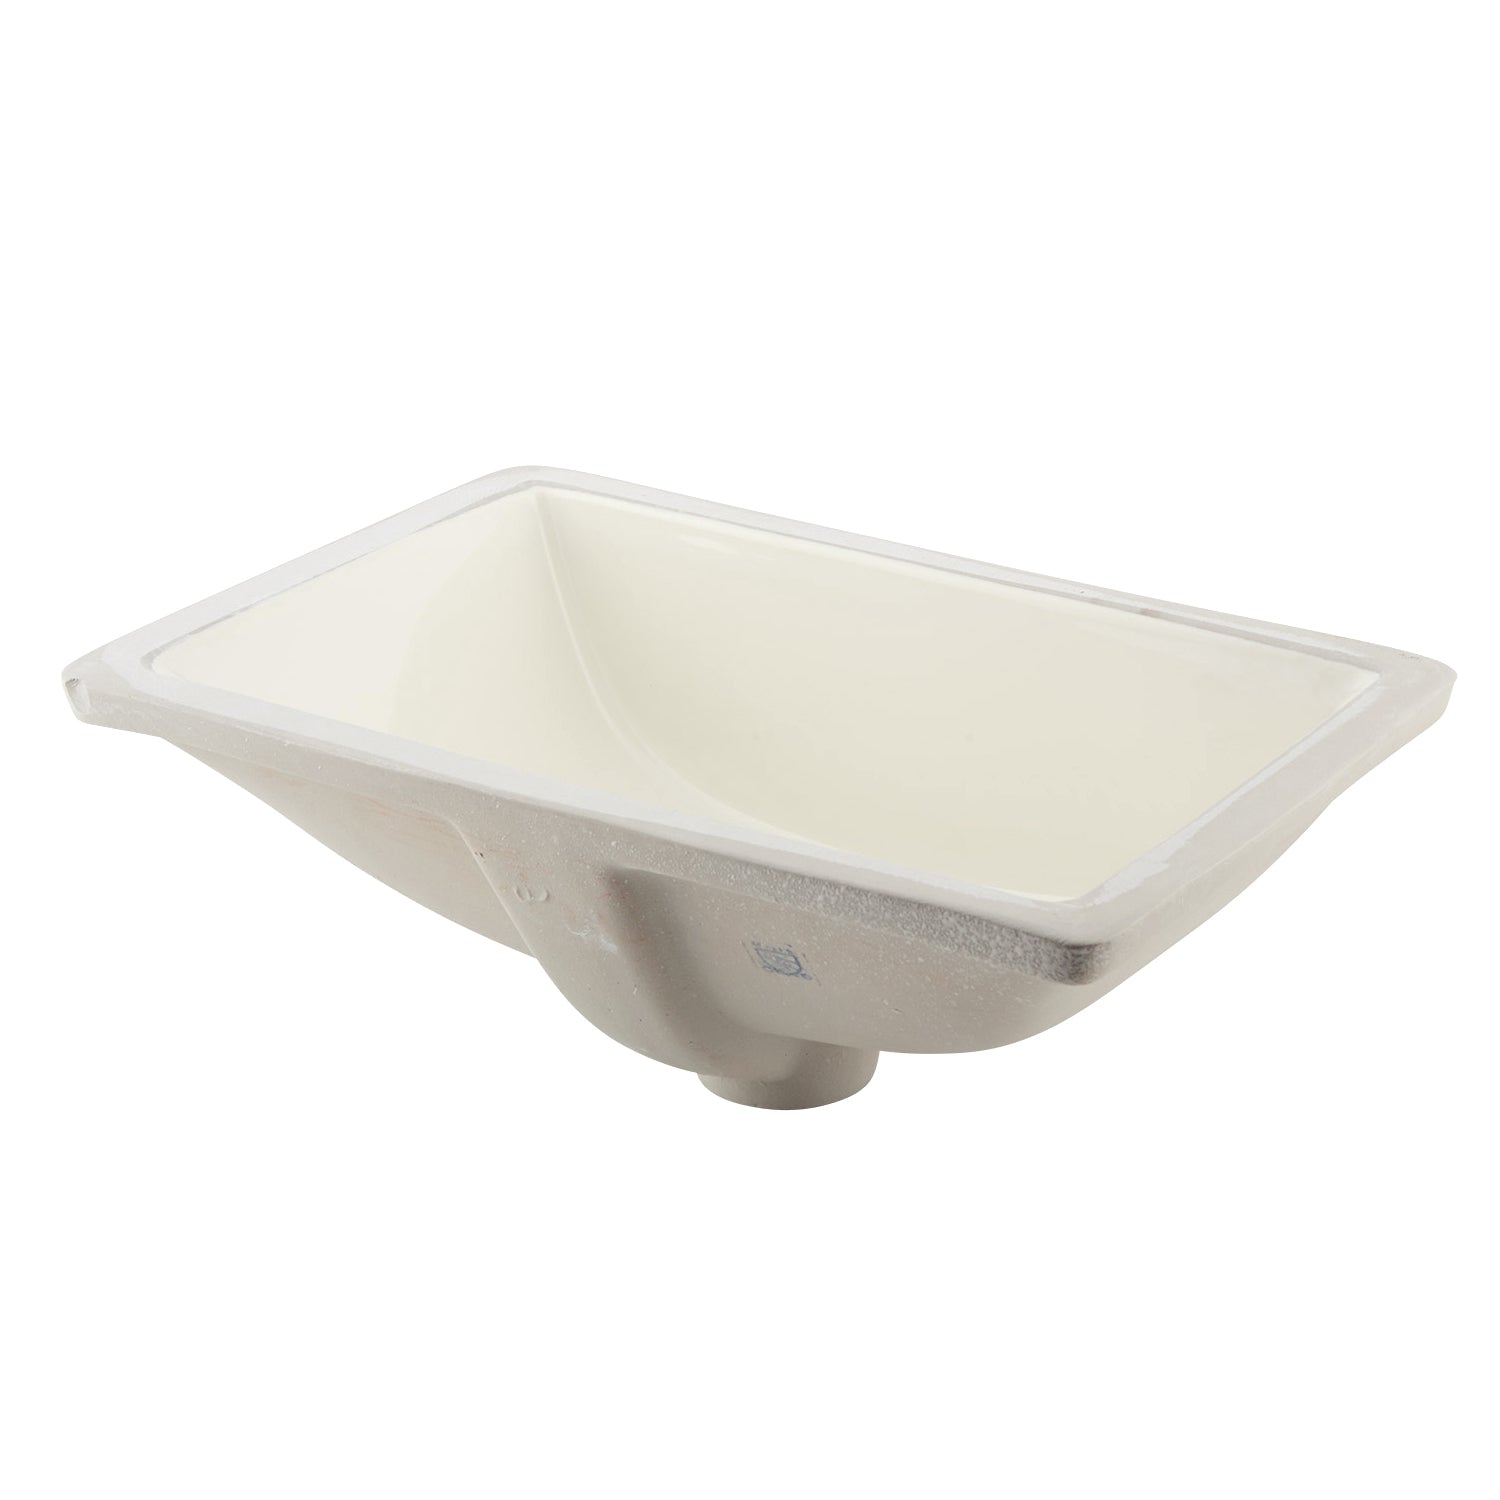 DAX Ceramic Square Single Bowl Undermount Bathroom Sink, Ivory Finish, 18-1/2 x 13 x 7-1/2 Inches (BSN-202B-I)